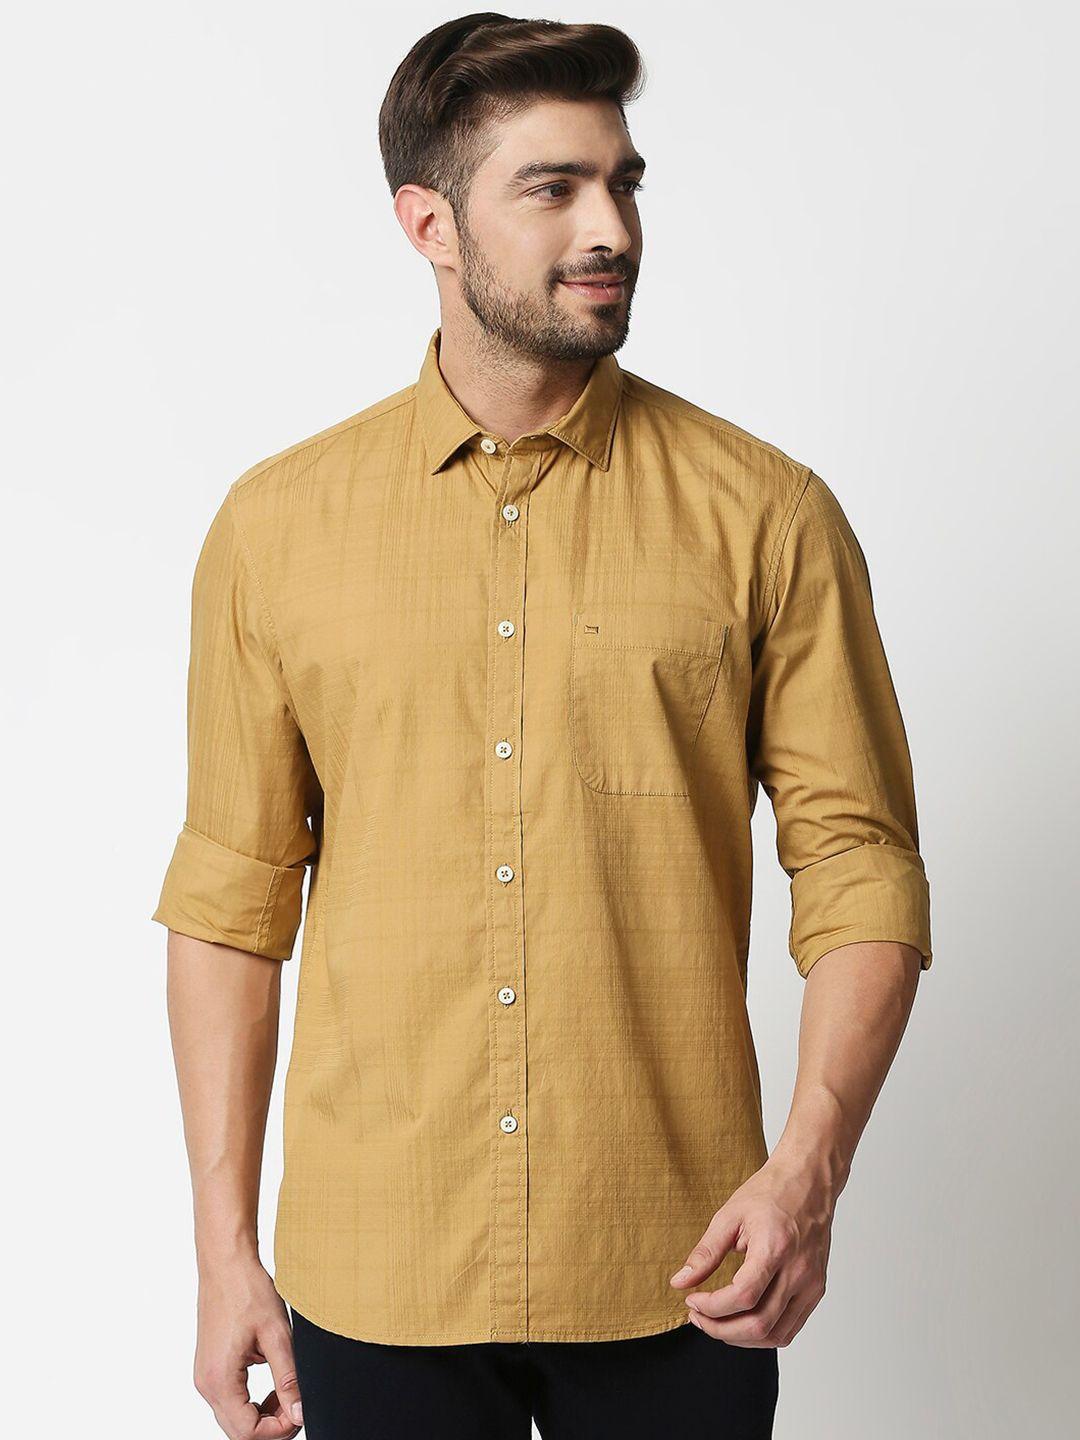 basics men mustard yellow cotton slim fit self-checked casual shirt